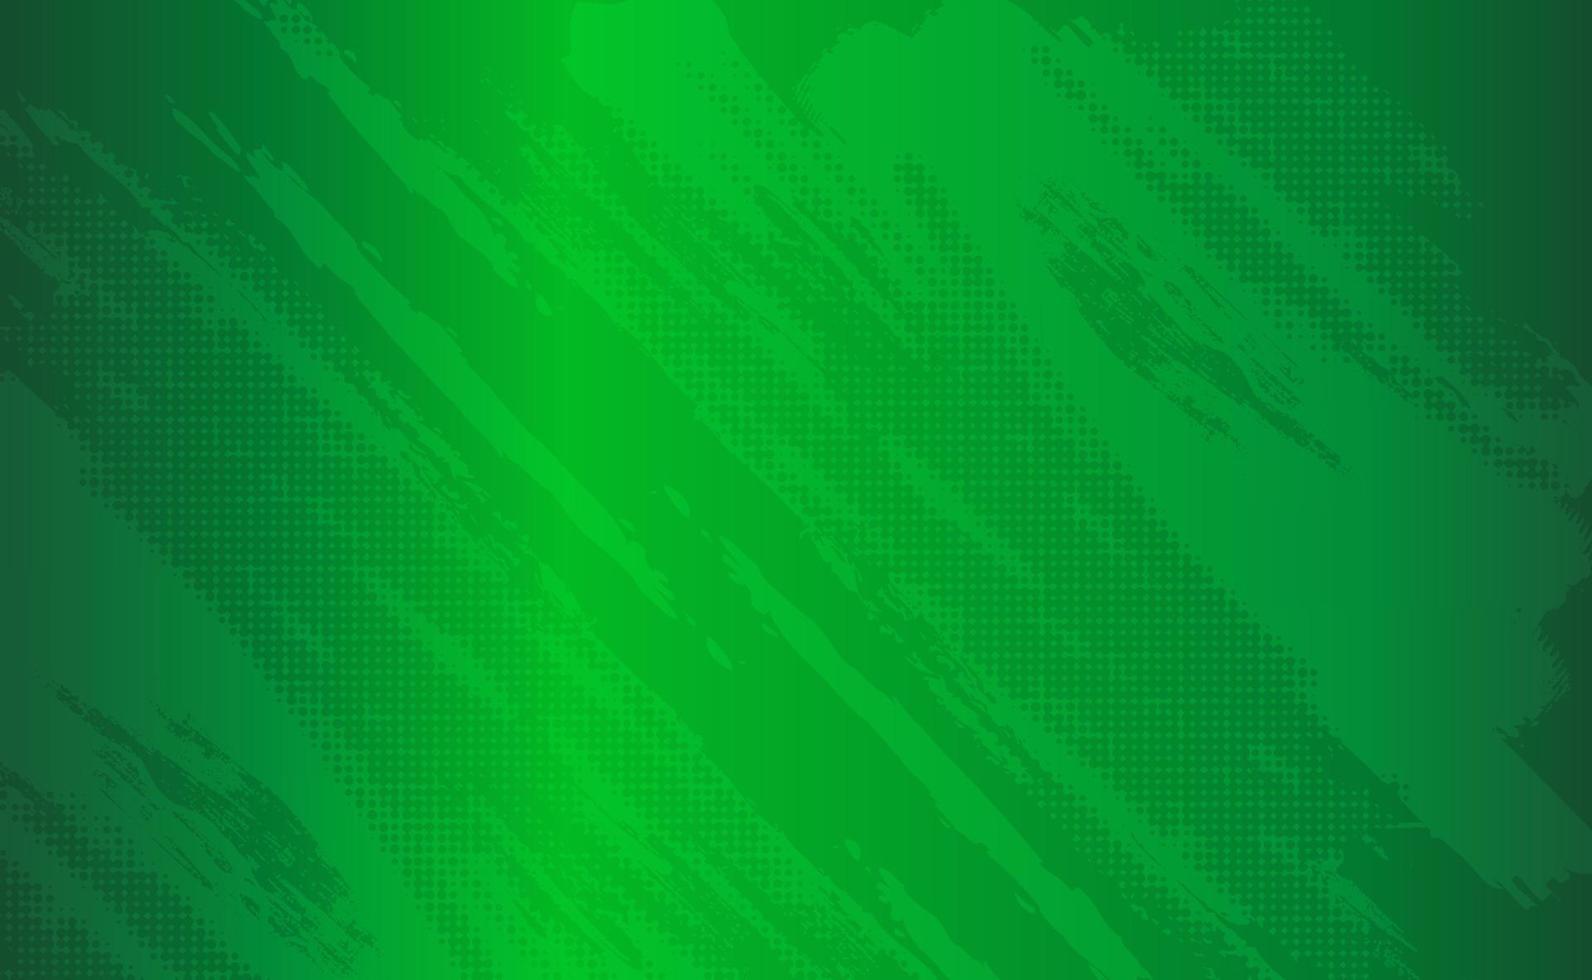 Green Grunge Background free vector download